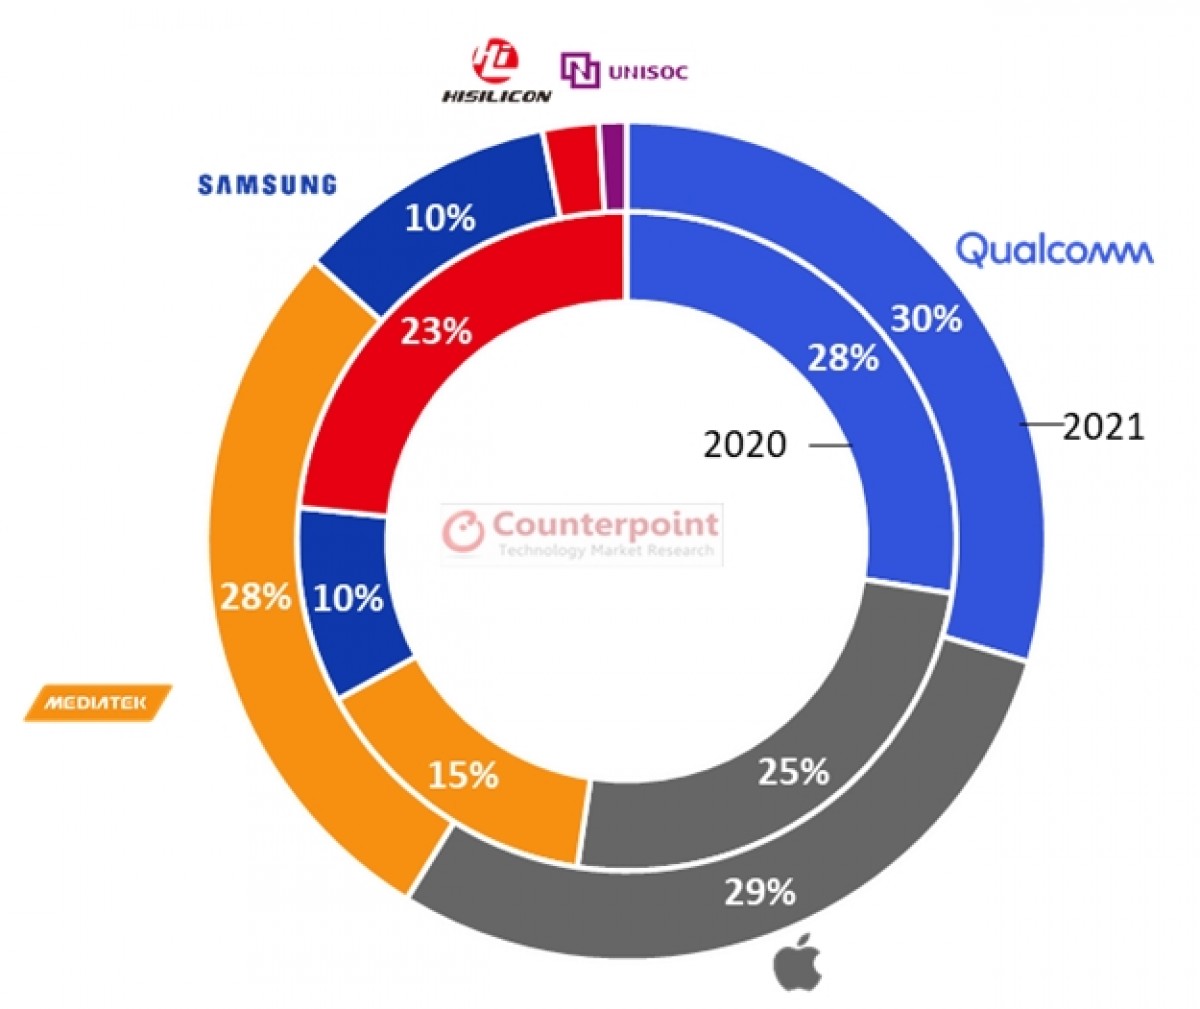 5G smartphone SoC market share